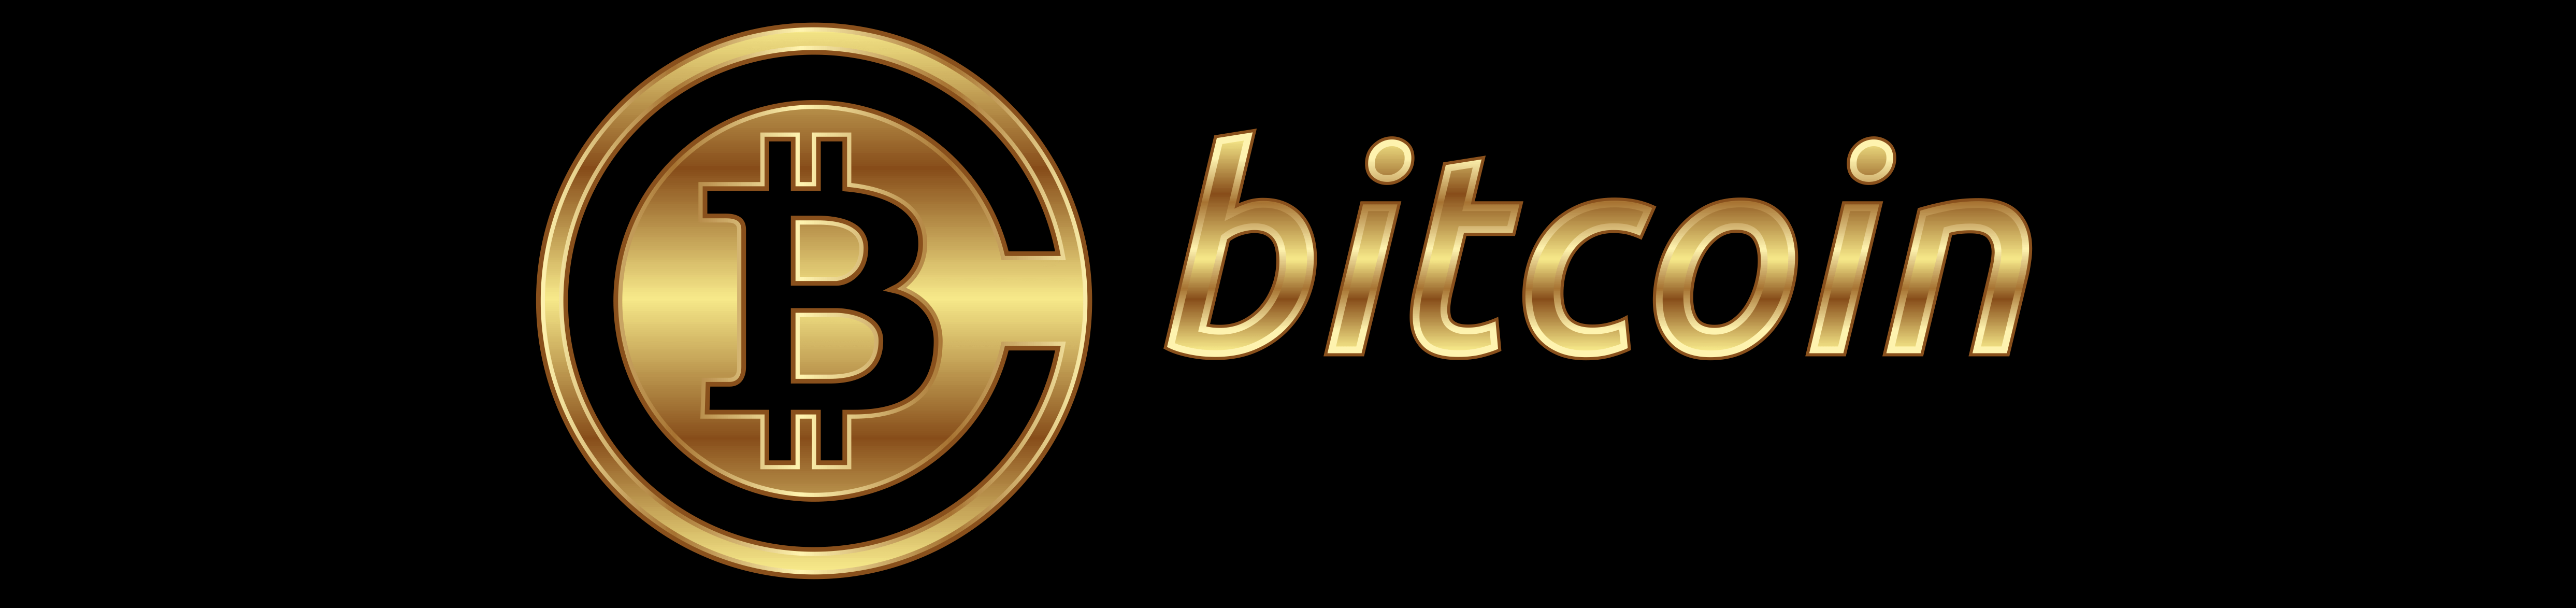 bitcoin text